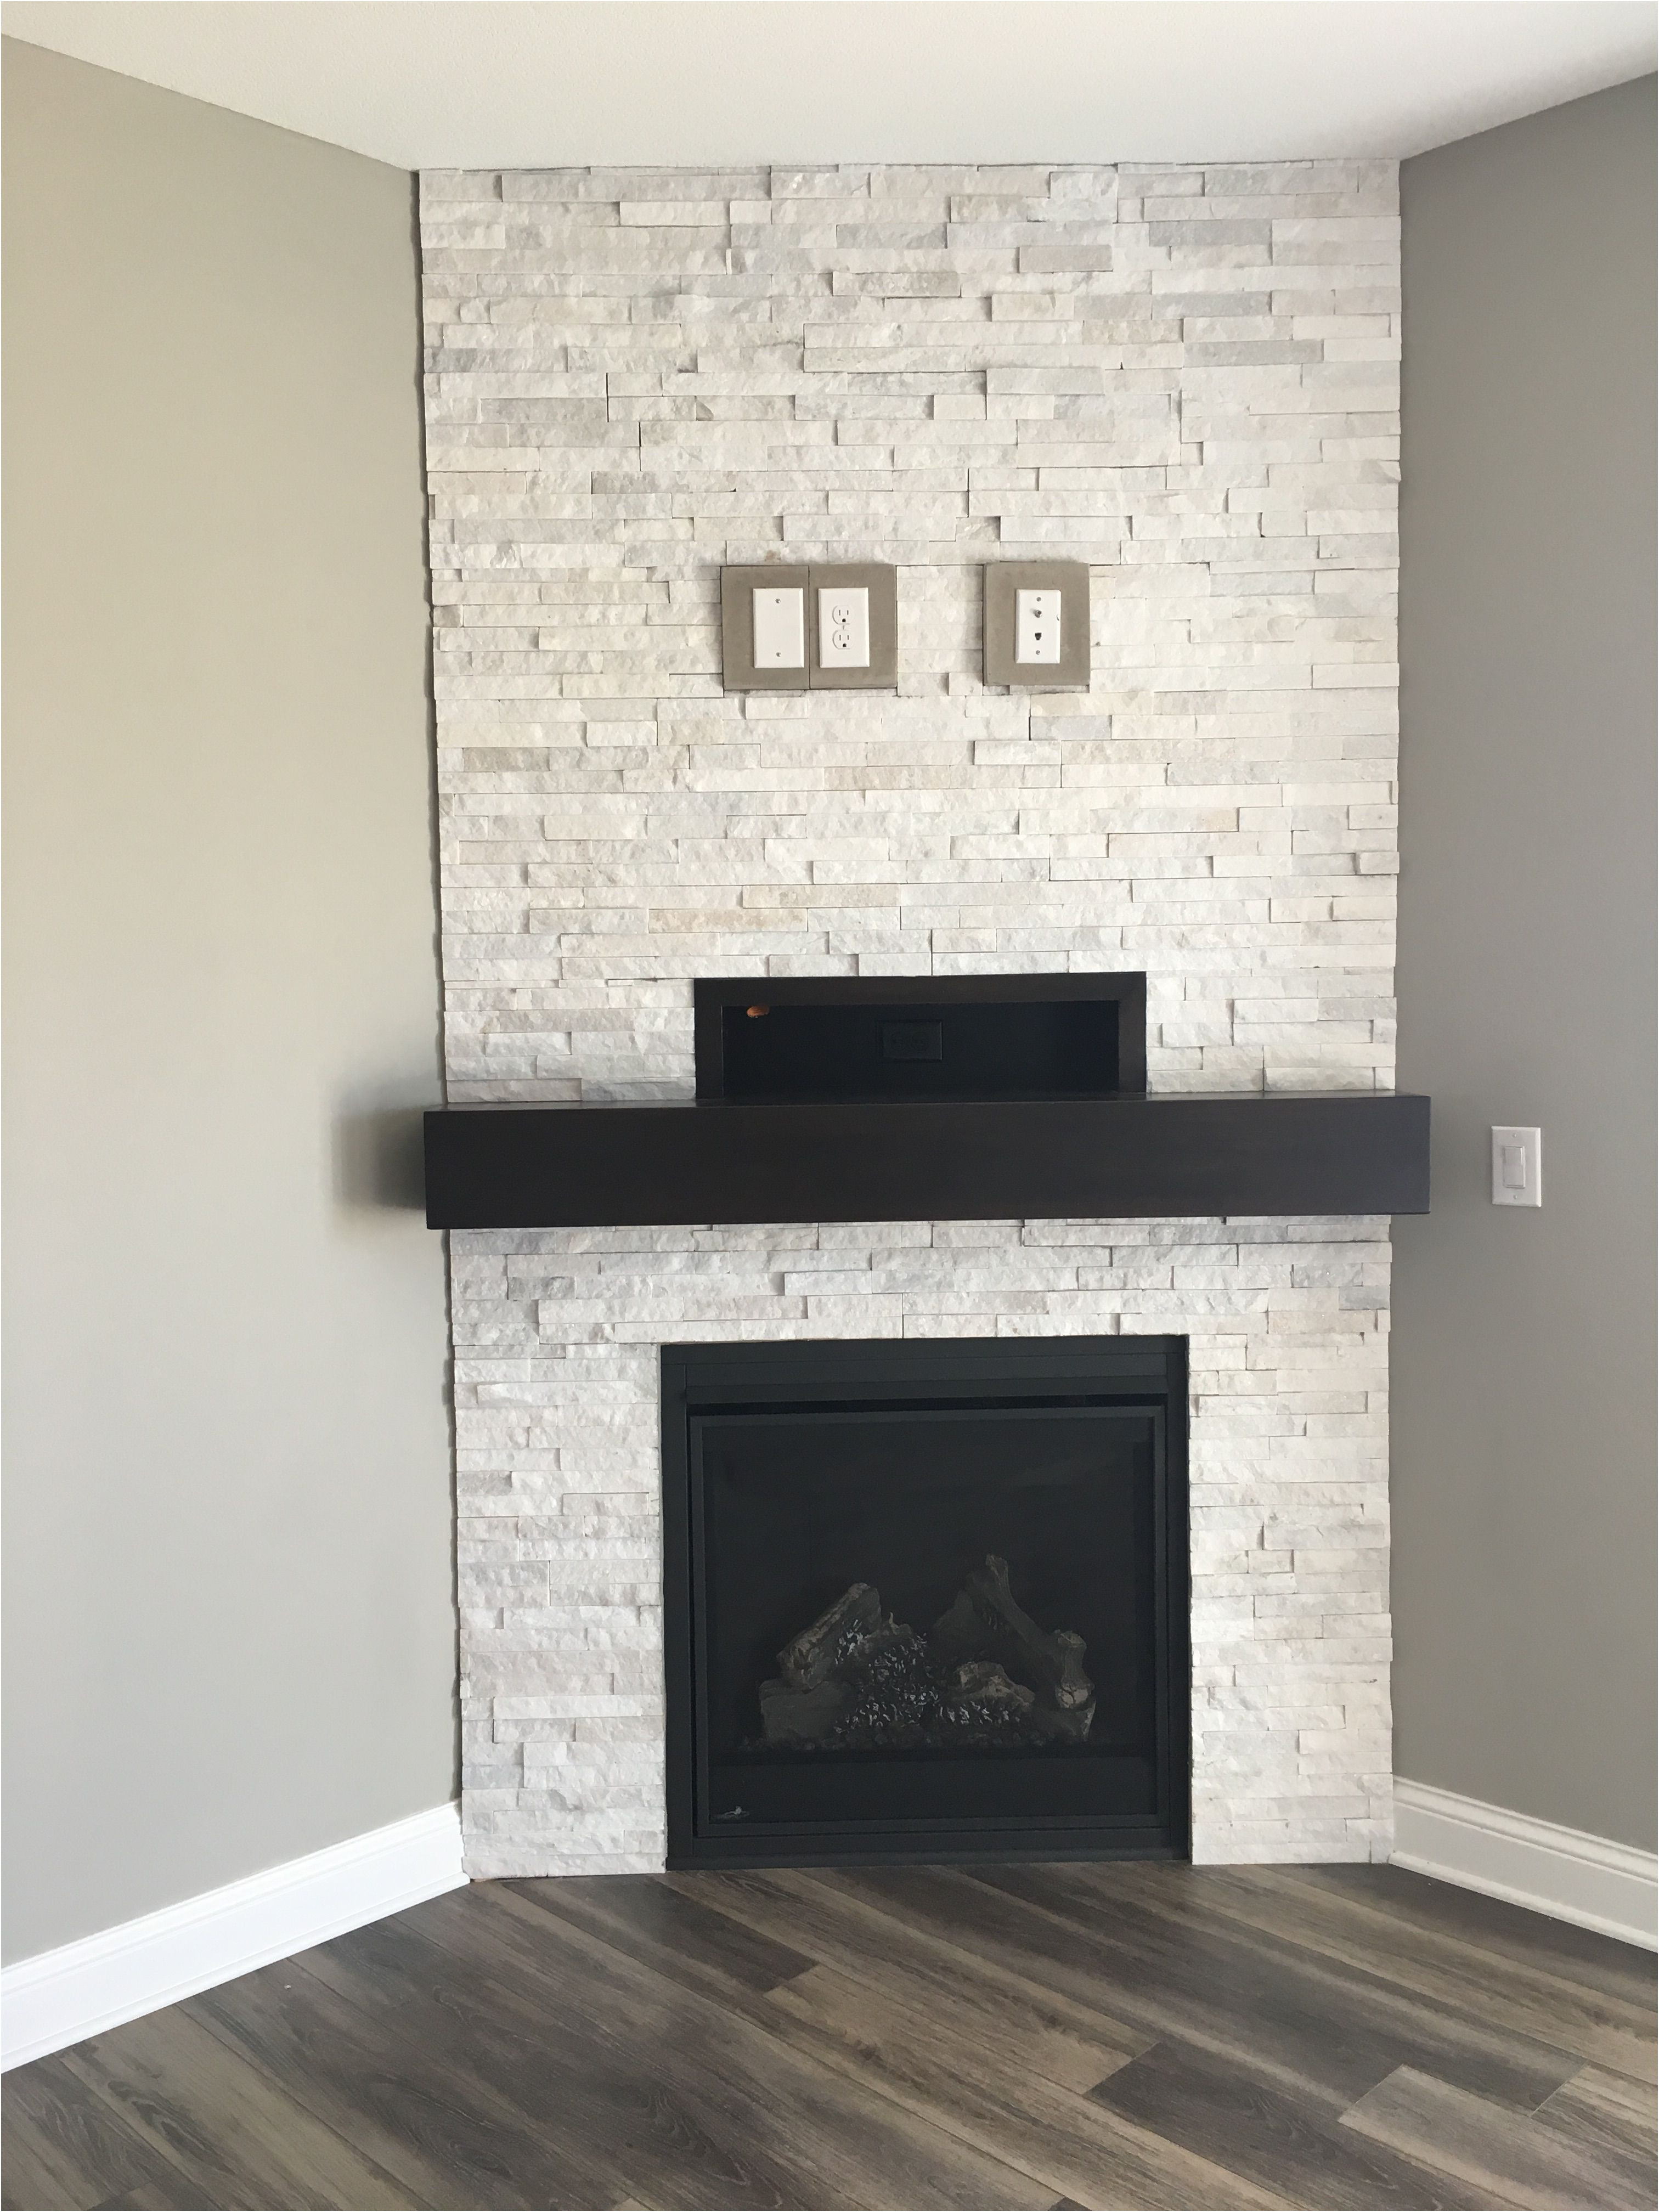 Decorative Fireplace Ideas New Pin On Fireplace Ideas We Love